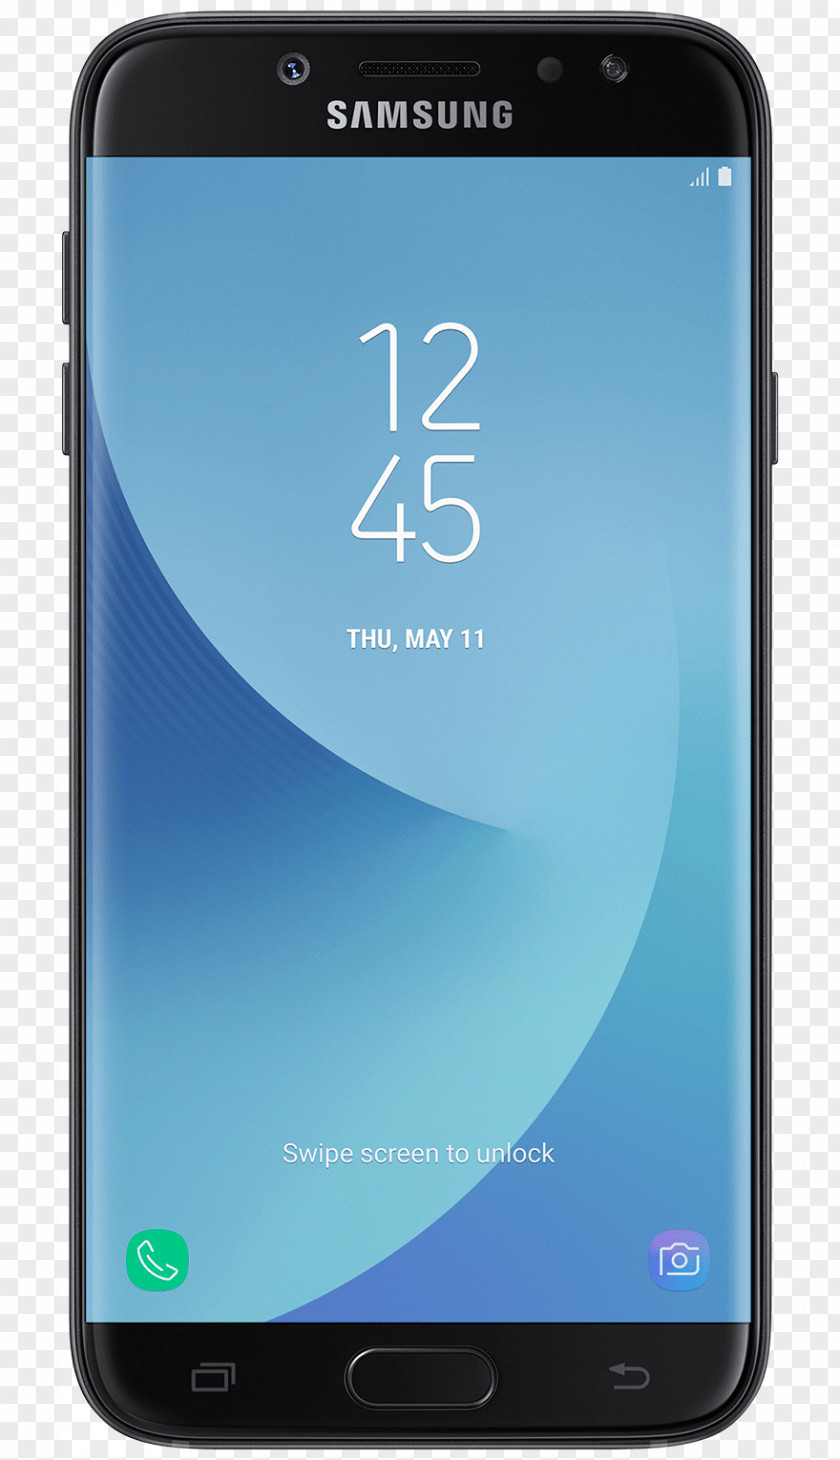 Samsung Galaxy J7 J5 Smartphone Electronics PNG